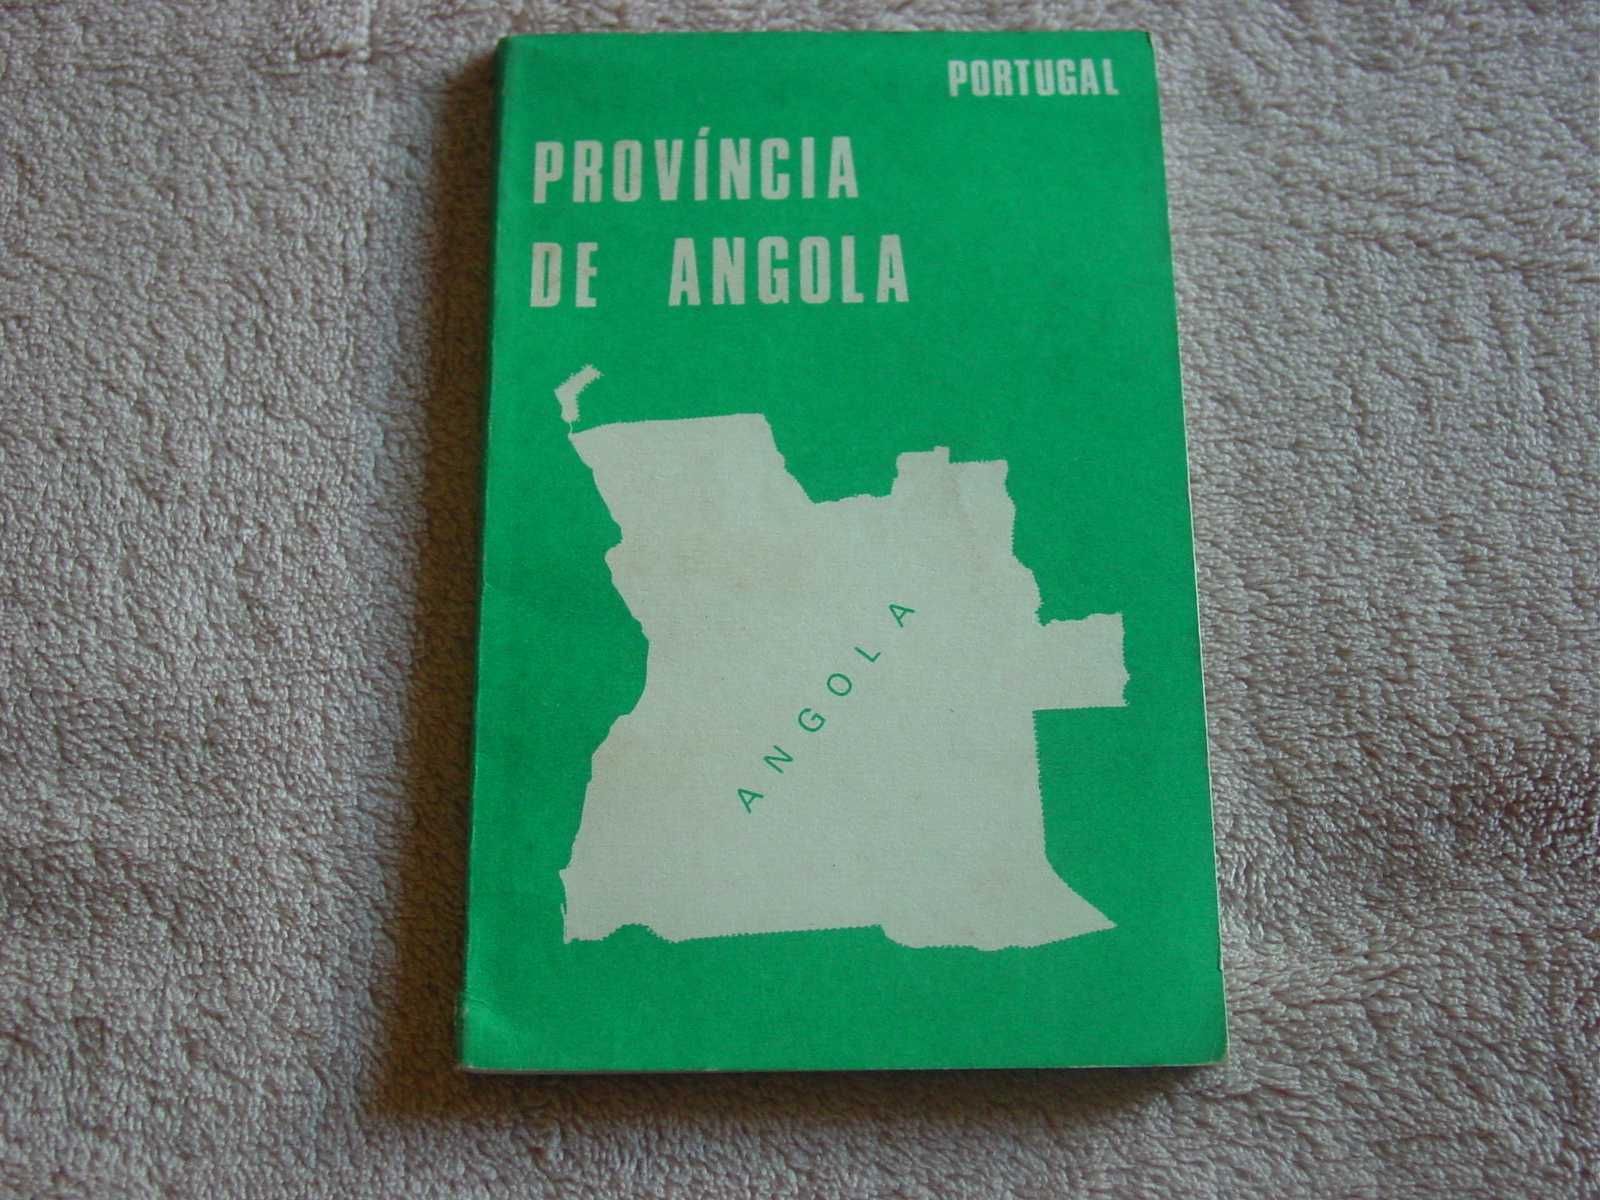 Livro " Província de Angola" - síntese monográfica do Estado Novo